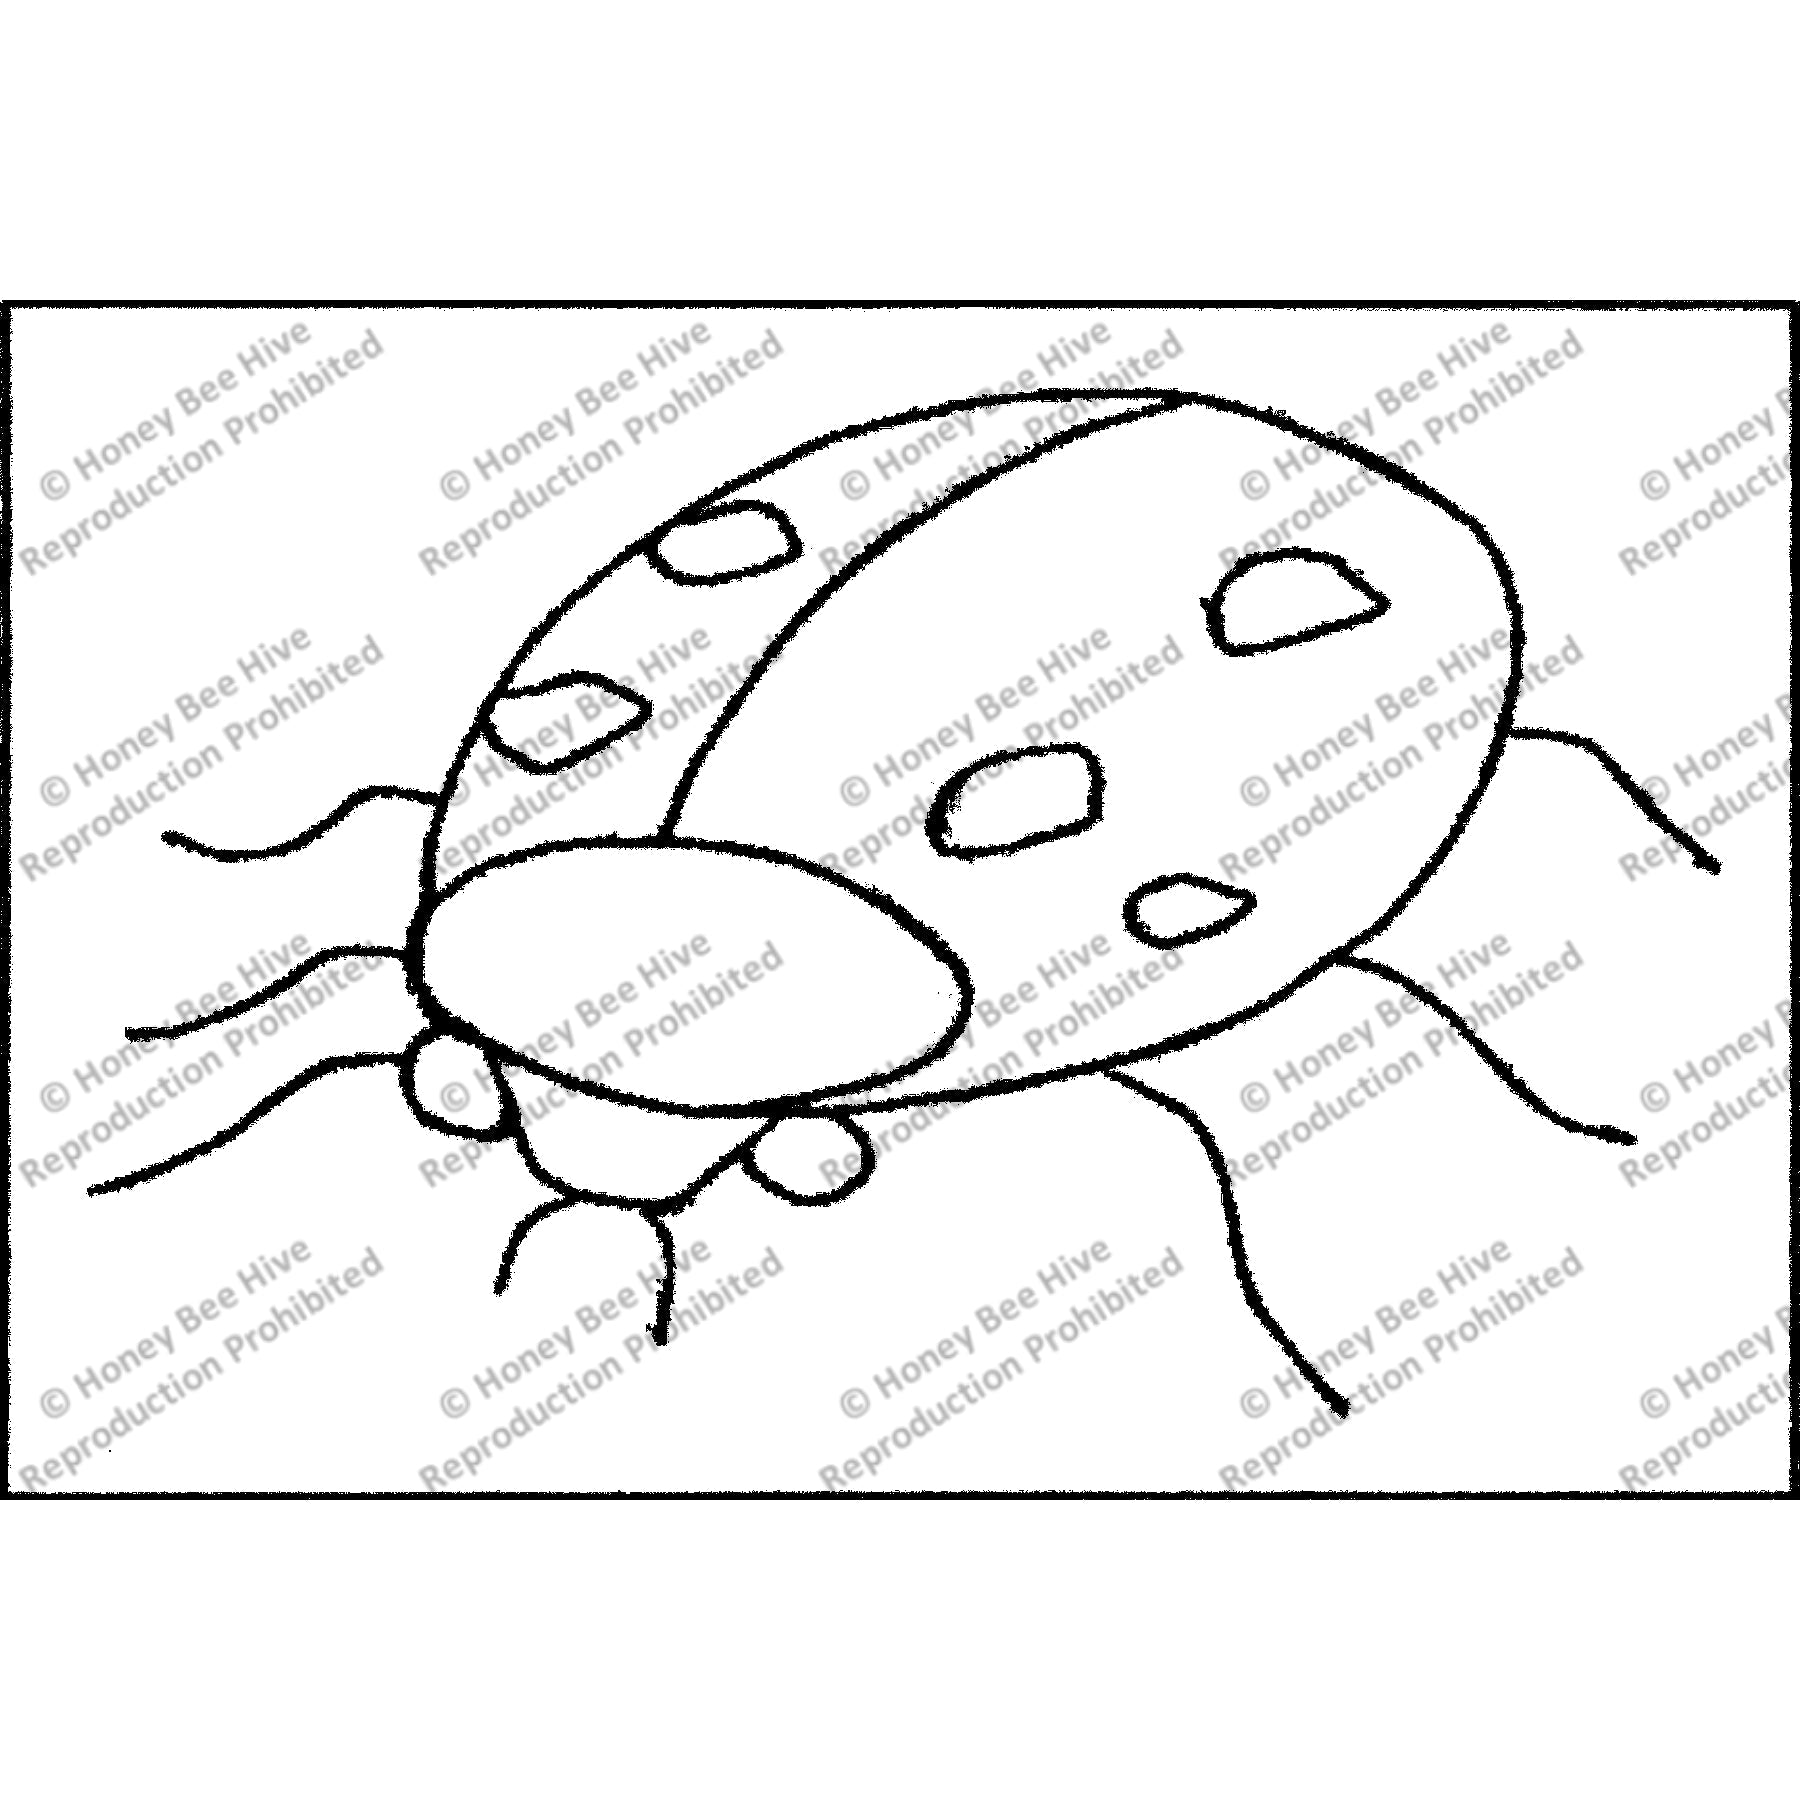 Ladybug, rug hooking pattern